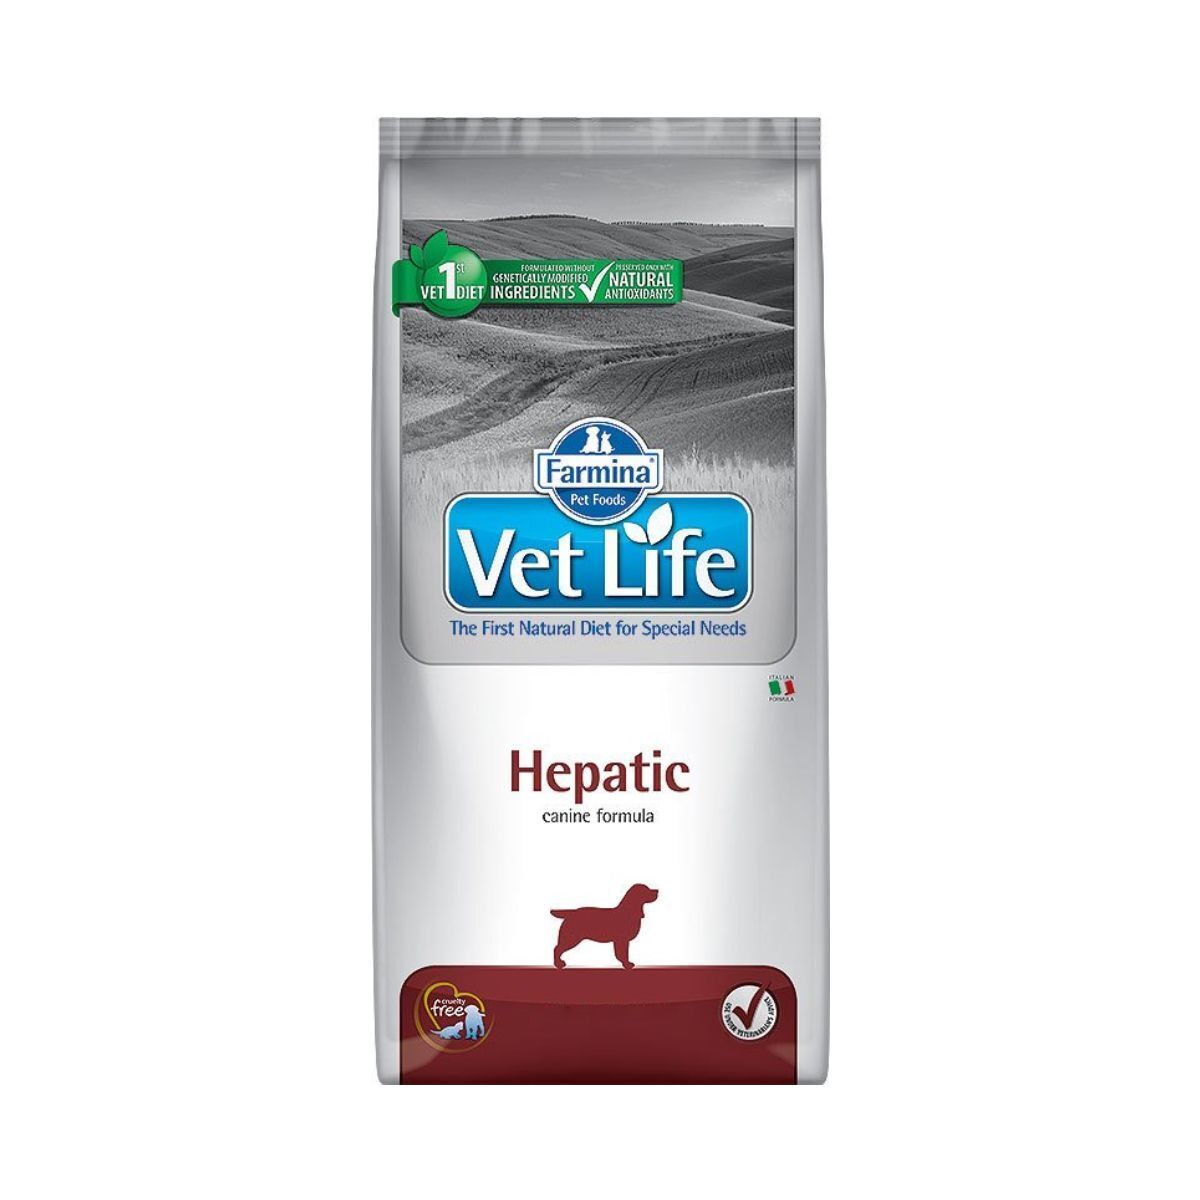 Вет лайф корм для собак. Корм для собак vet Life Hypoallergenic. Farmina vet Life hepatic для собак. Farmina vet Life hepatic консервы. Фармина Манагемент Струвит кошачий корм.